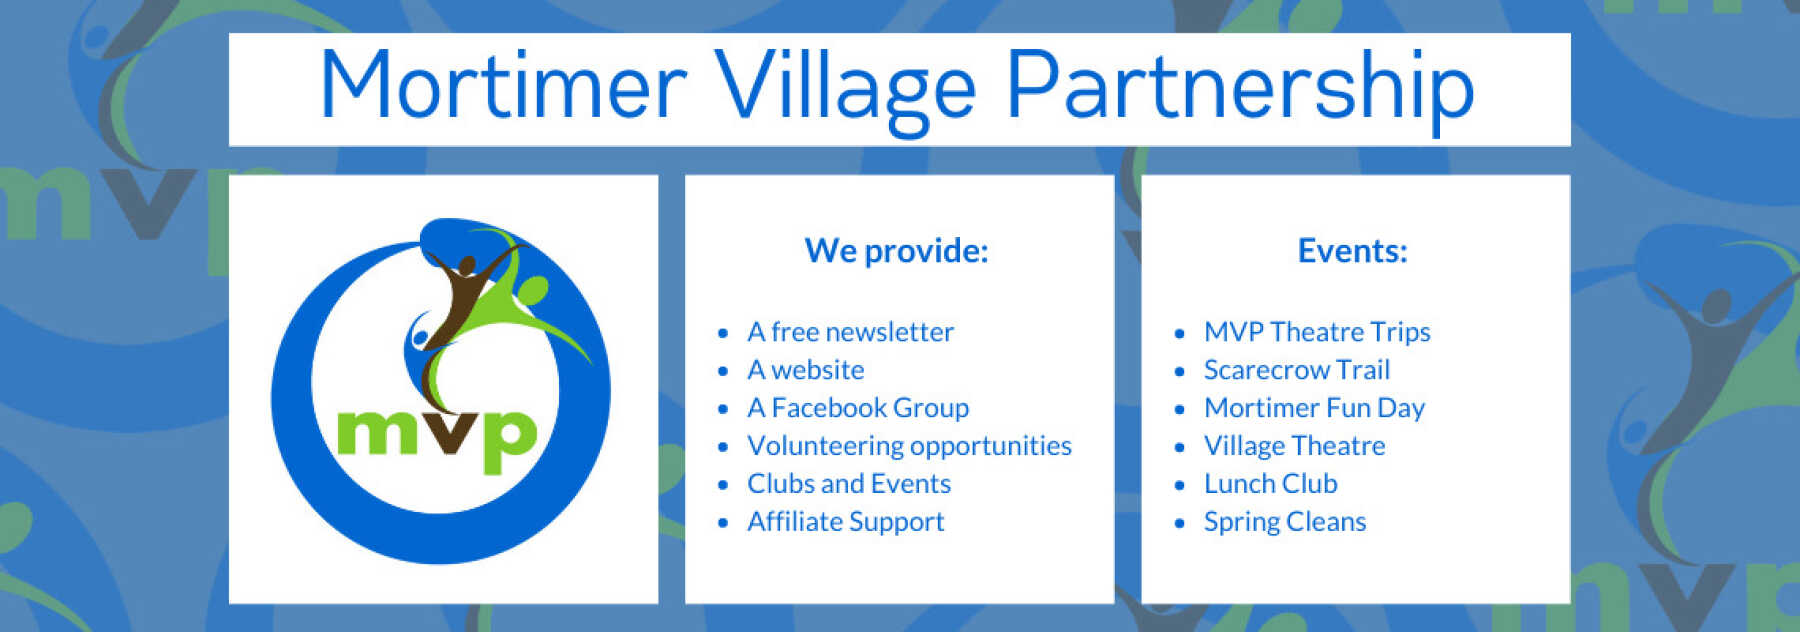 Featured Image for Mortimer Village Partnership